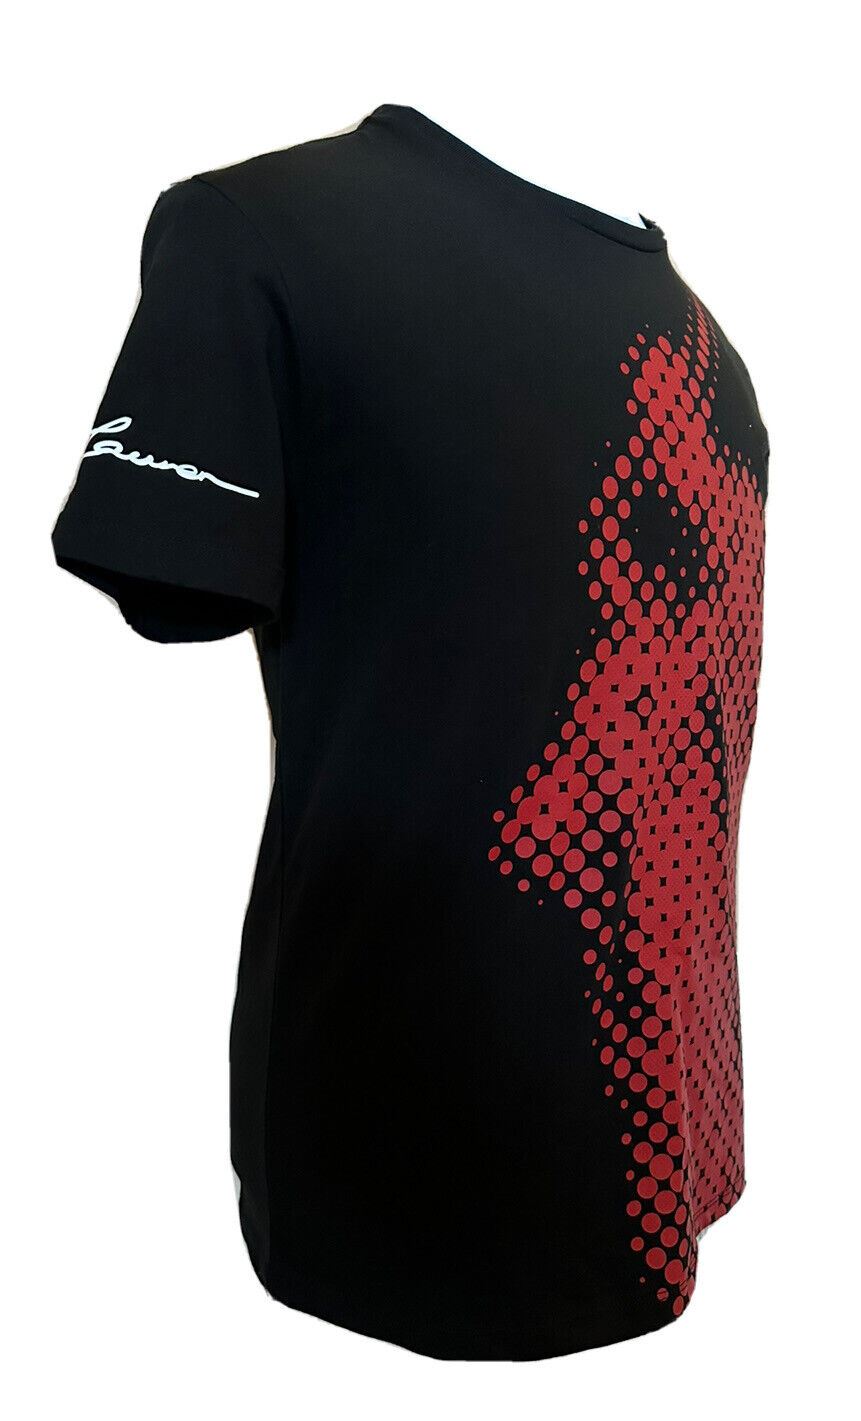 Neu mit Etikett: 65 $ Polo Ralph Lauren Kurzarm-Logo-T-Shirt Schwarz XL 